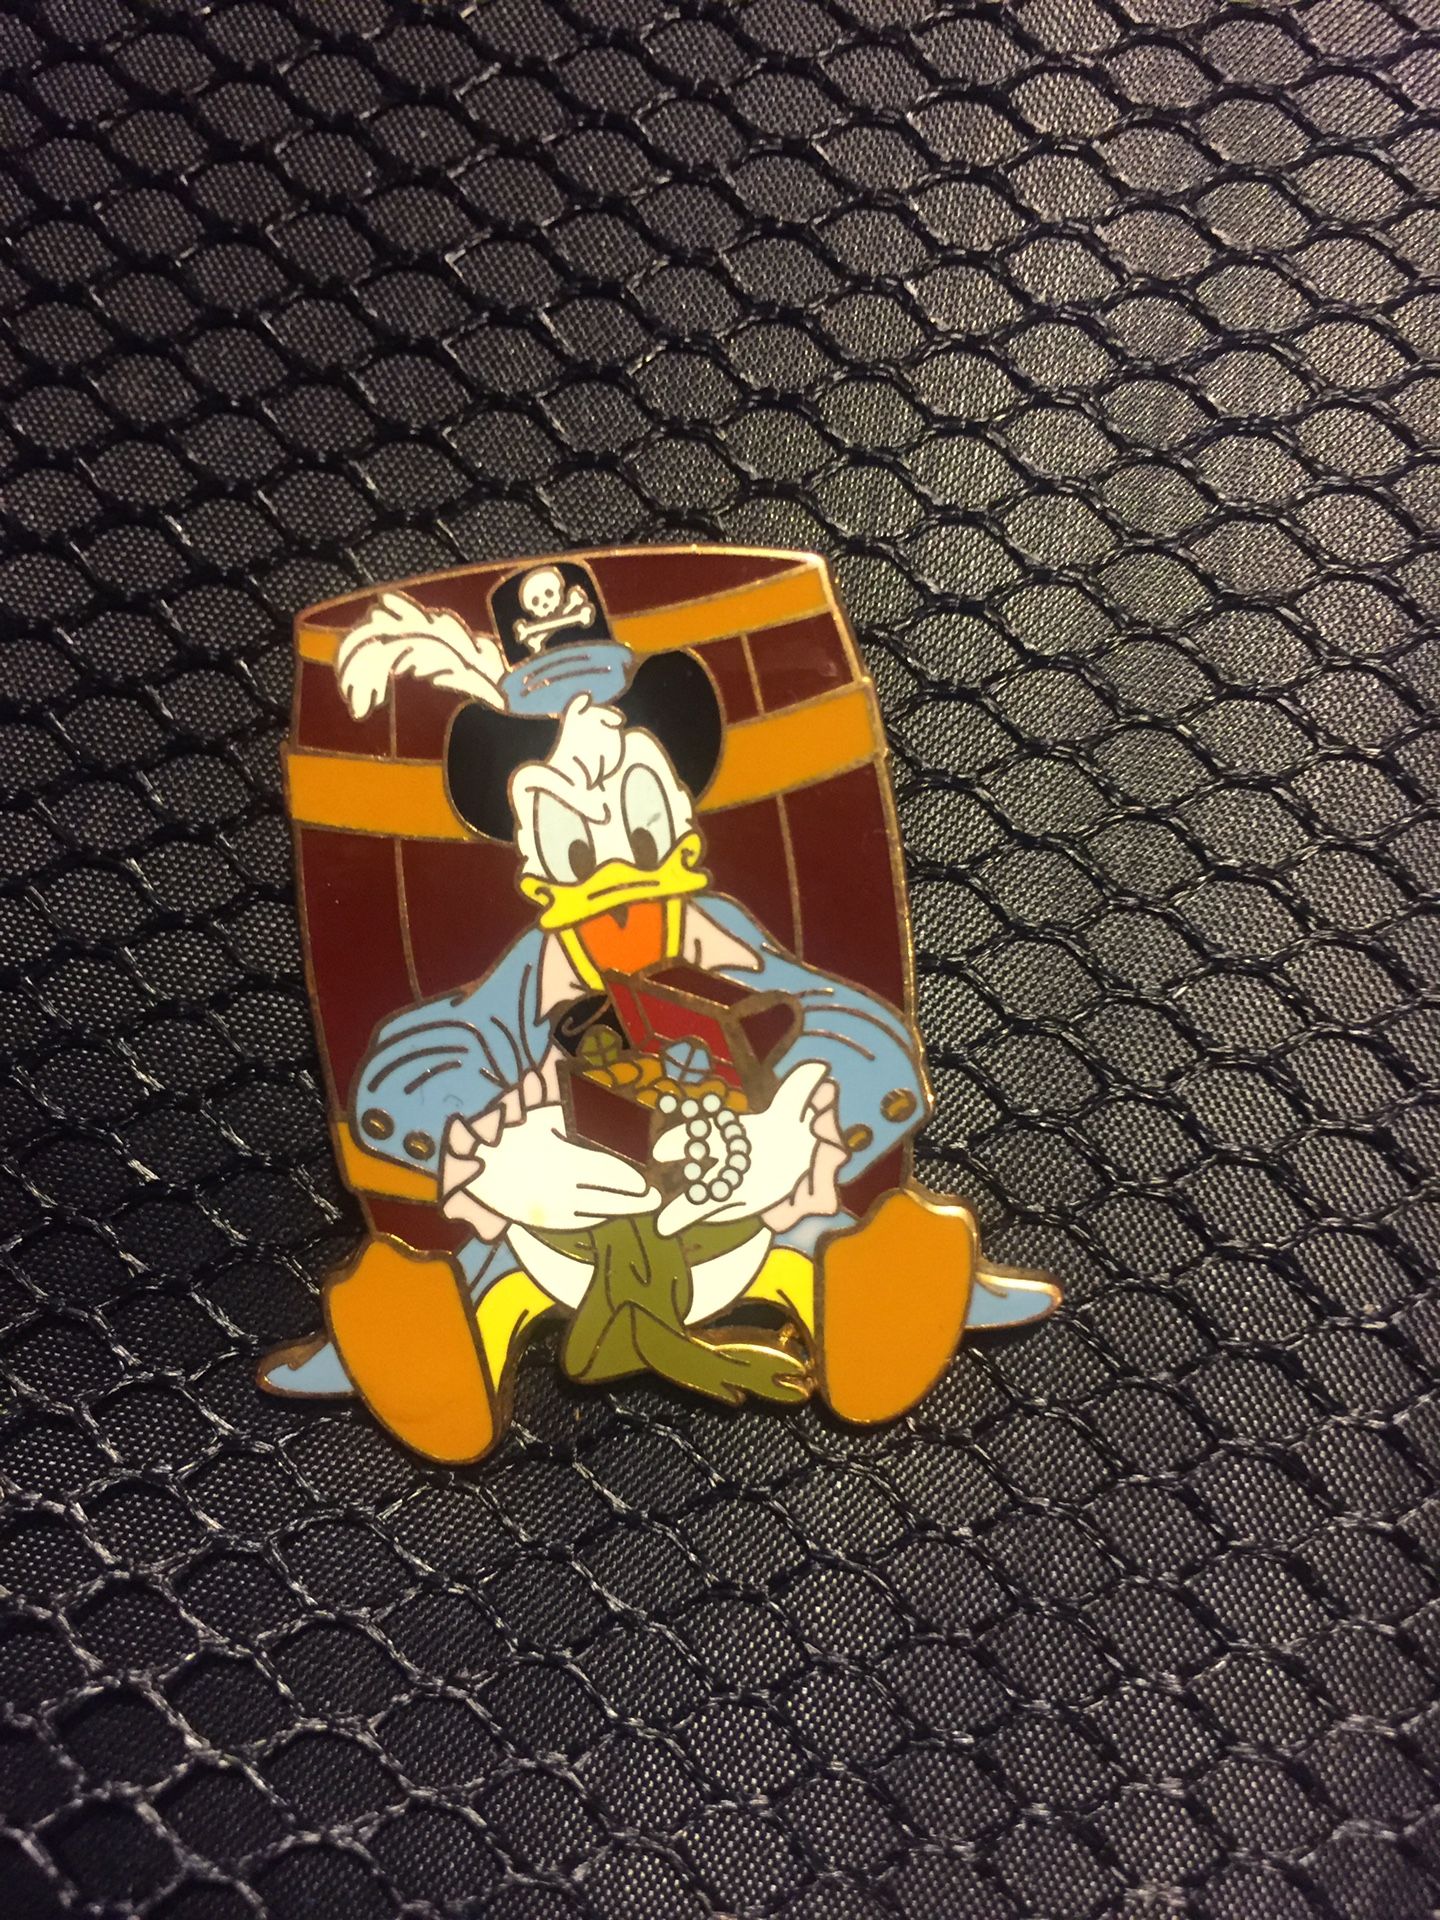 Donald Duck Pirate Disney Pin